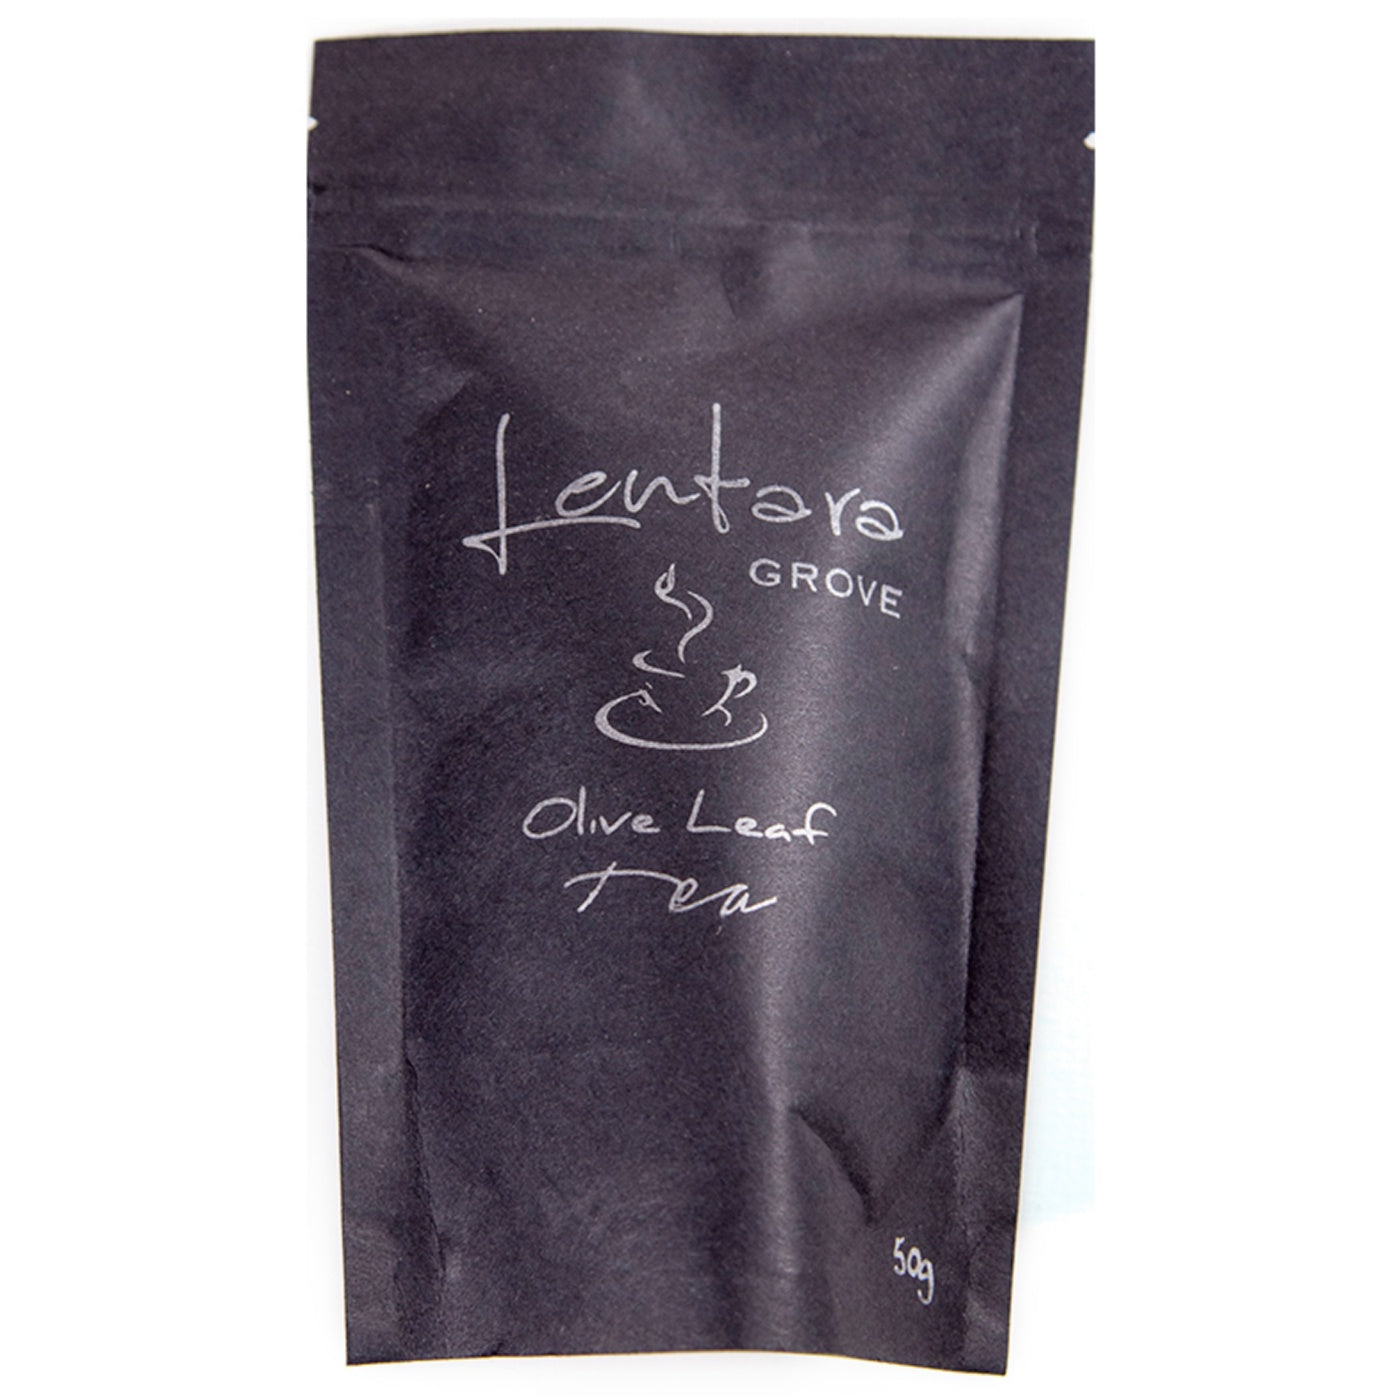 Lentara Grove - Olive Leaf Tea - 50g